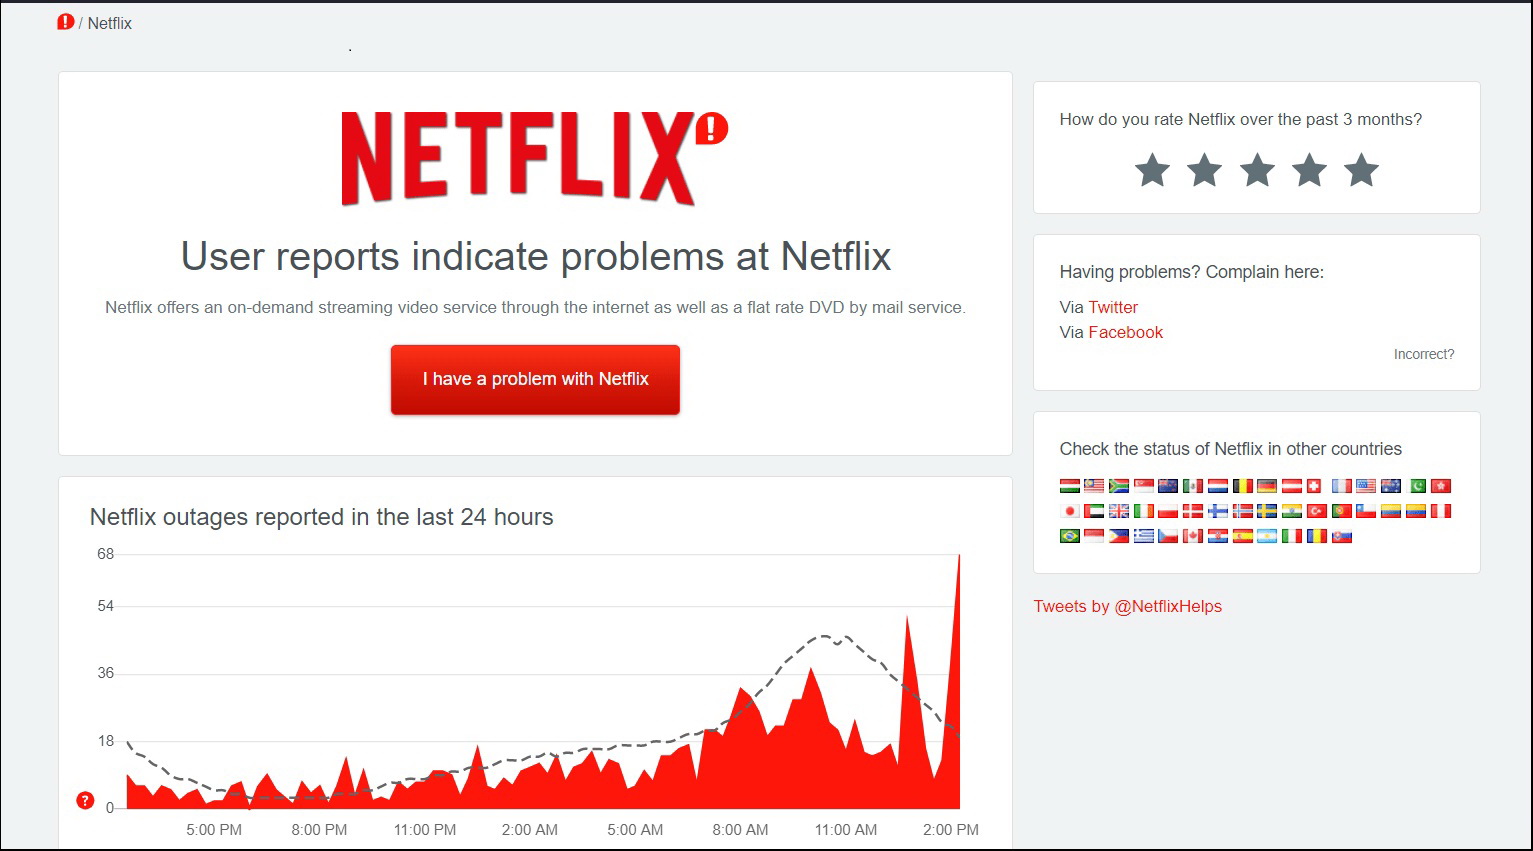   Netflix-Error-Code-f7111-1931-404-Check-the-status-of-Netflix 